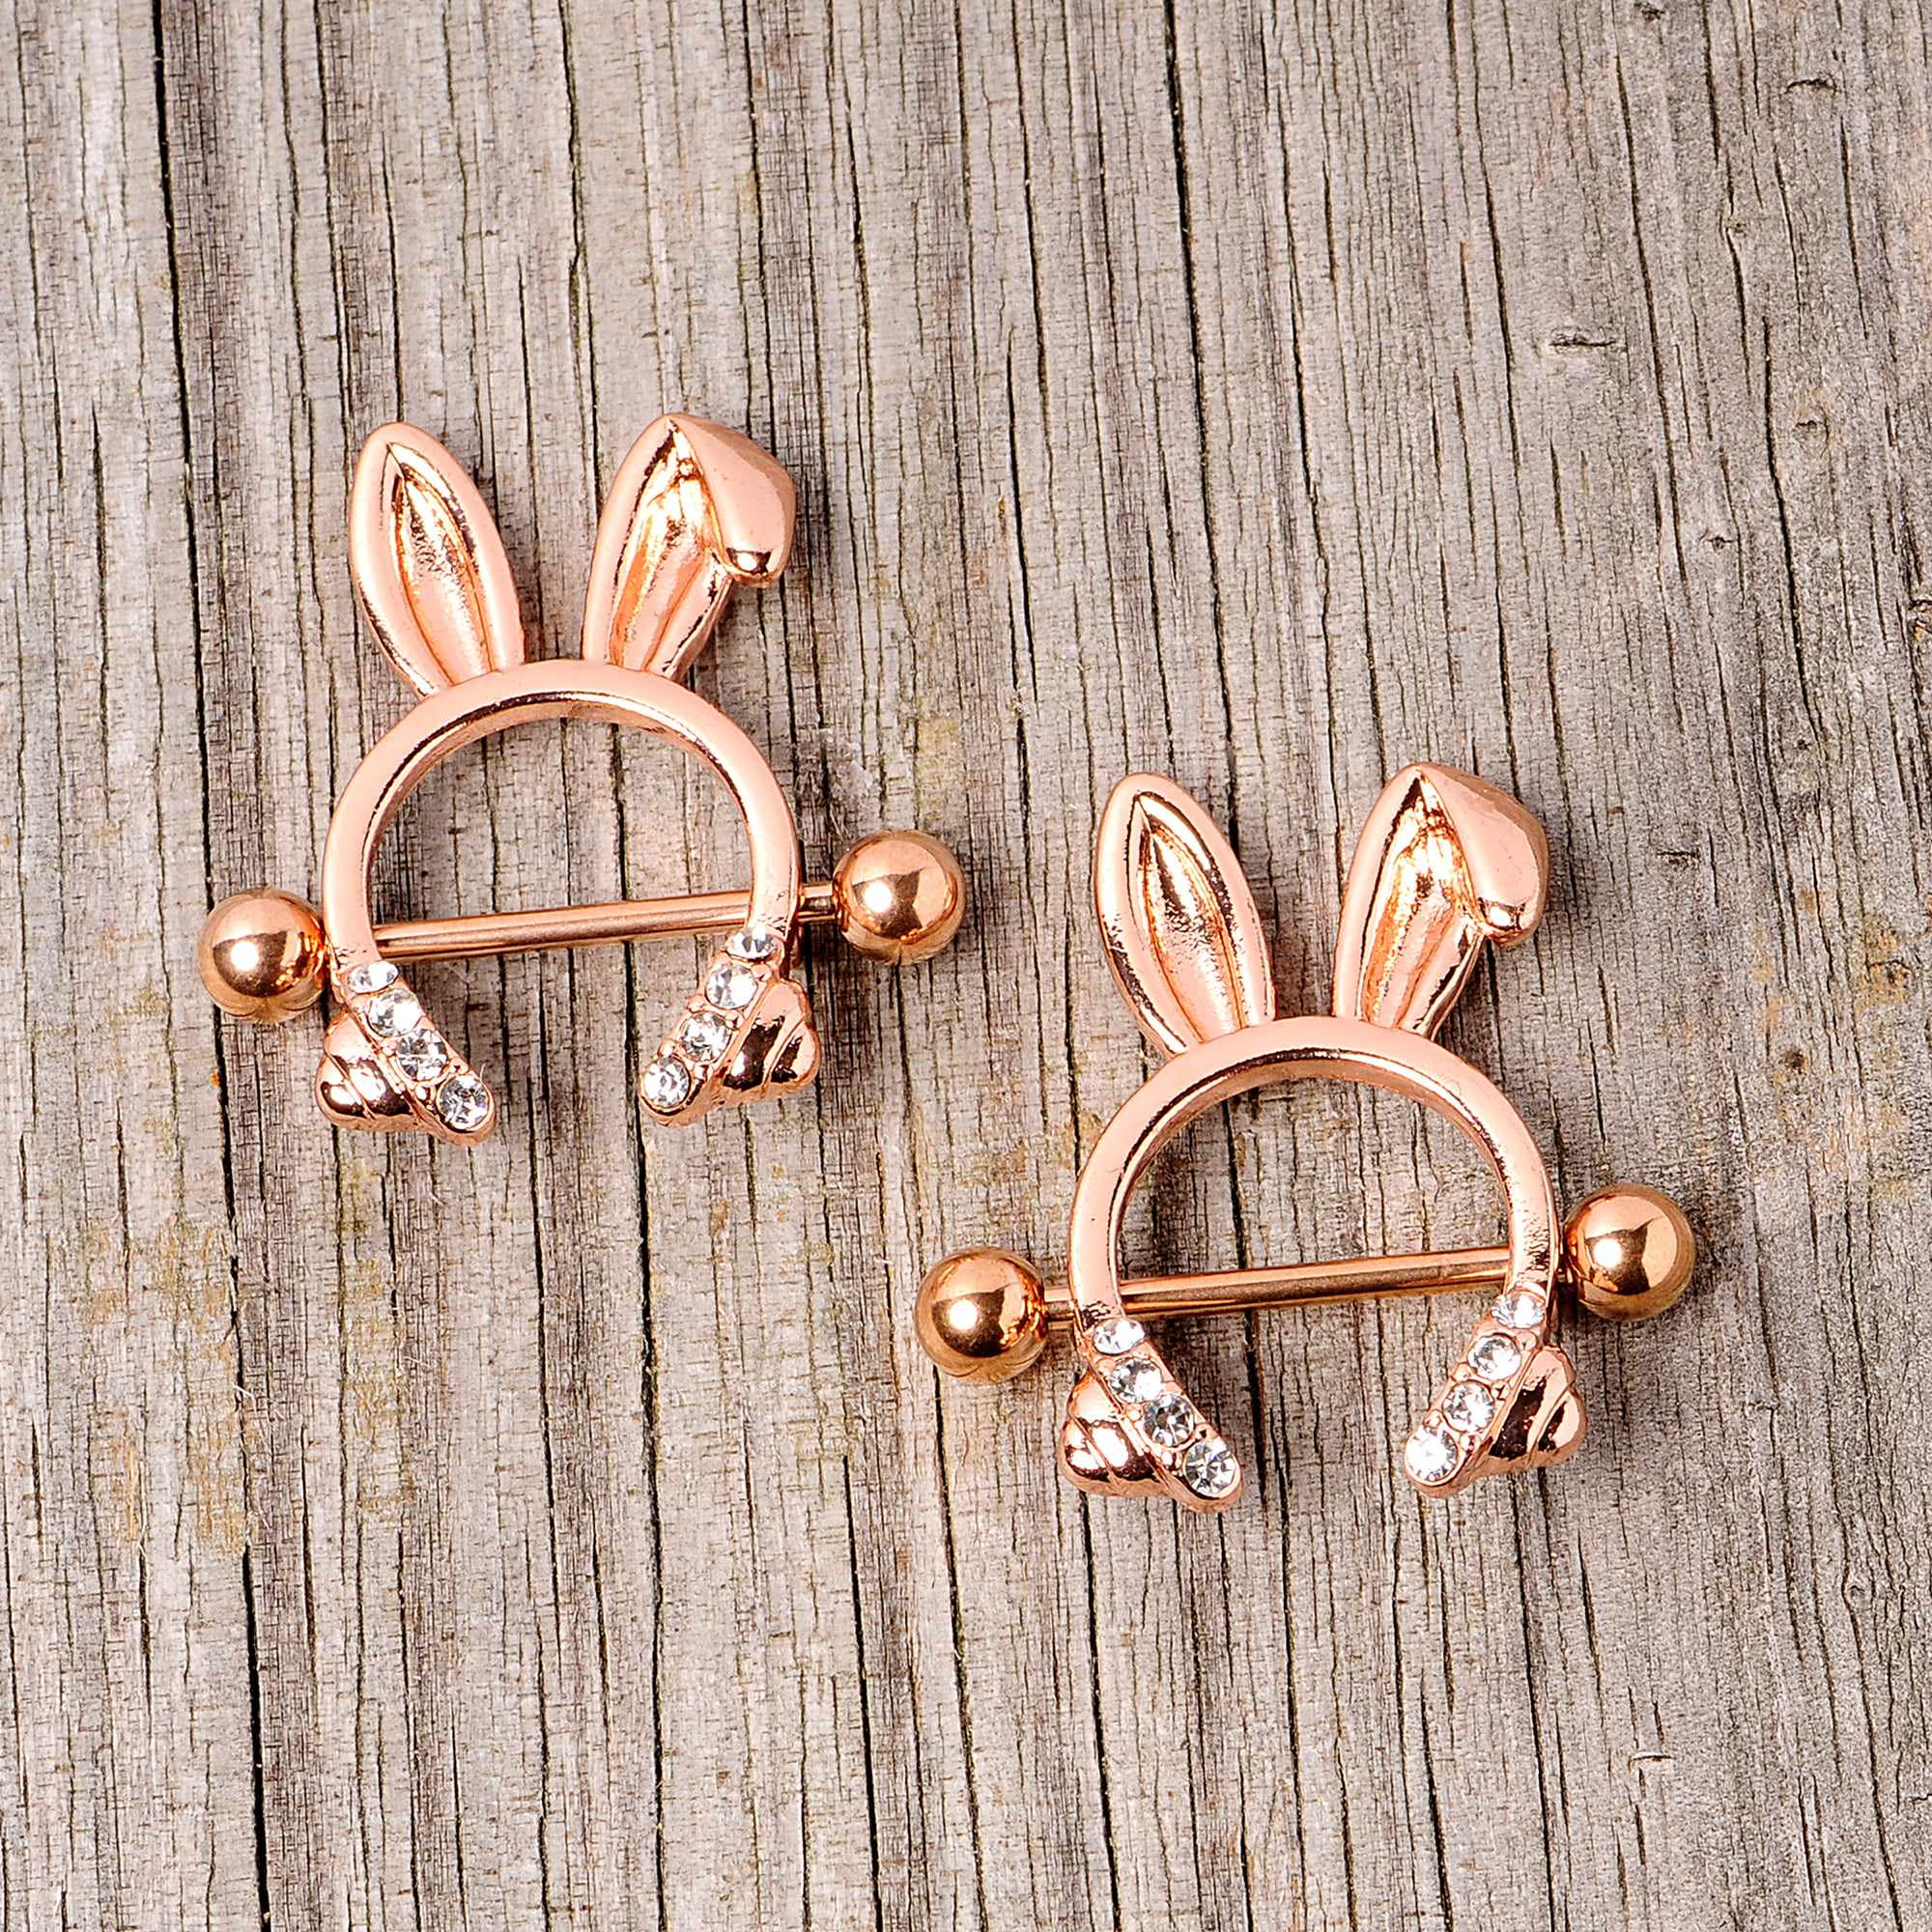 Body Candy 14G Womens Nipplerings Piercing PVD Steel 2Pc Rosy Bunny Ear  Headphones Nipple Ring Set 9/16